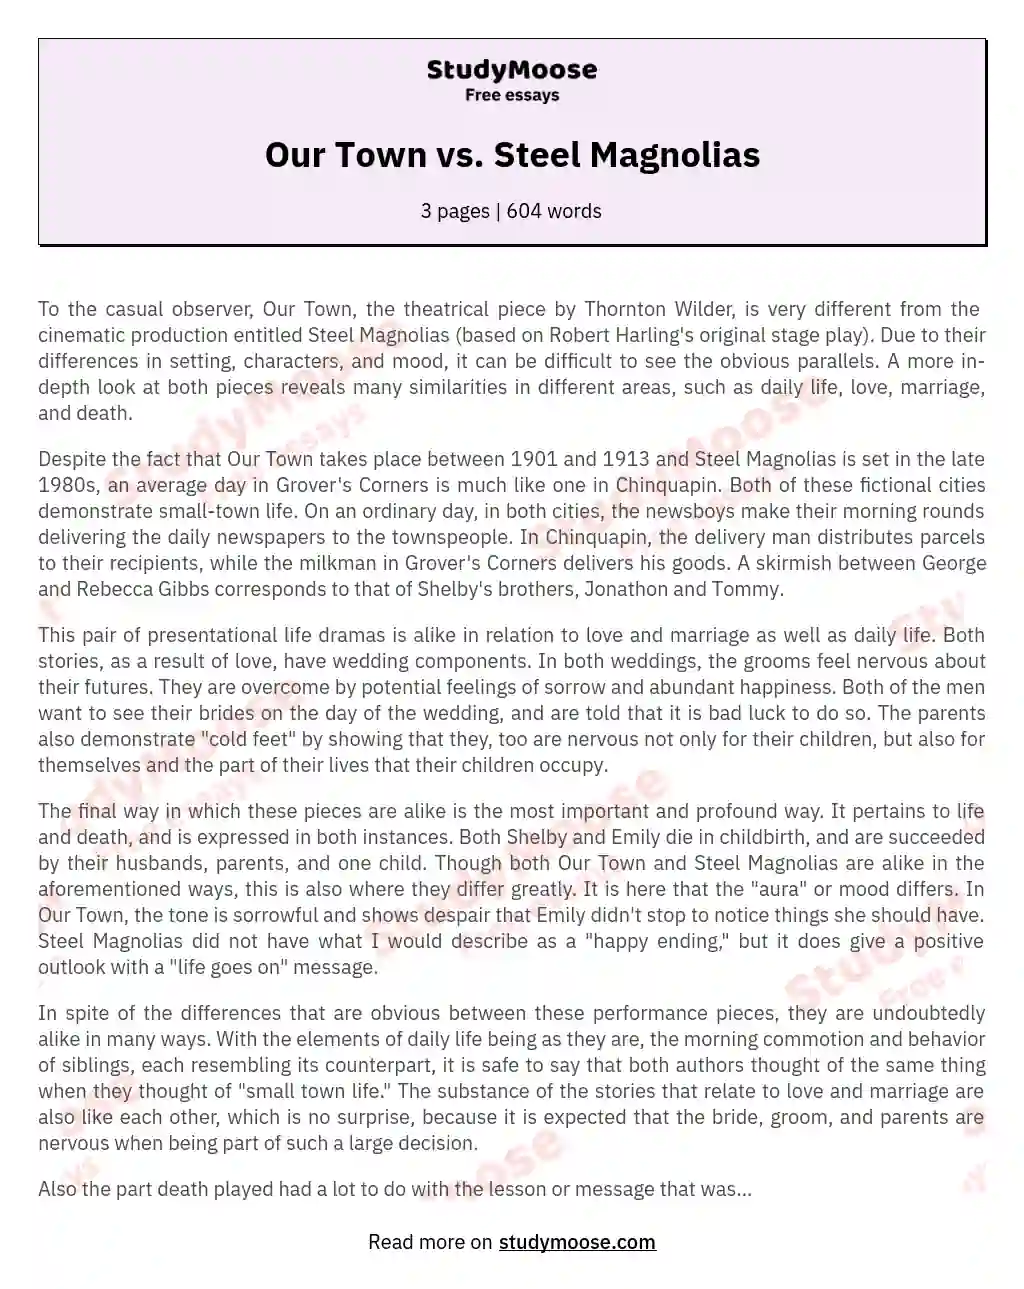 Our Town vs. Steel Magnolias essay